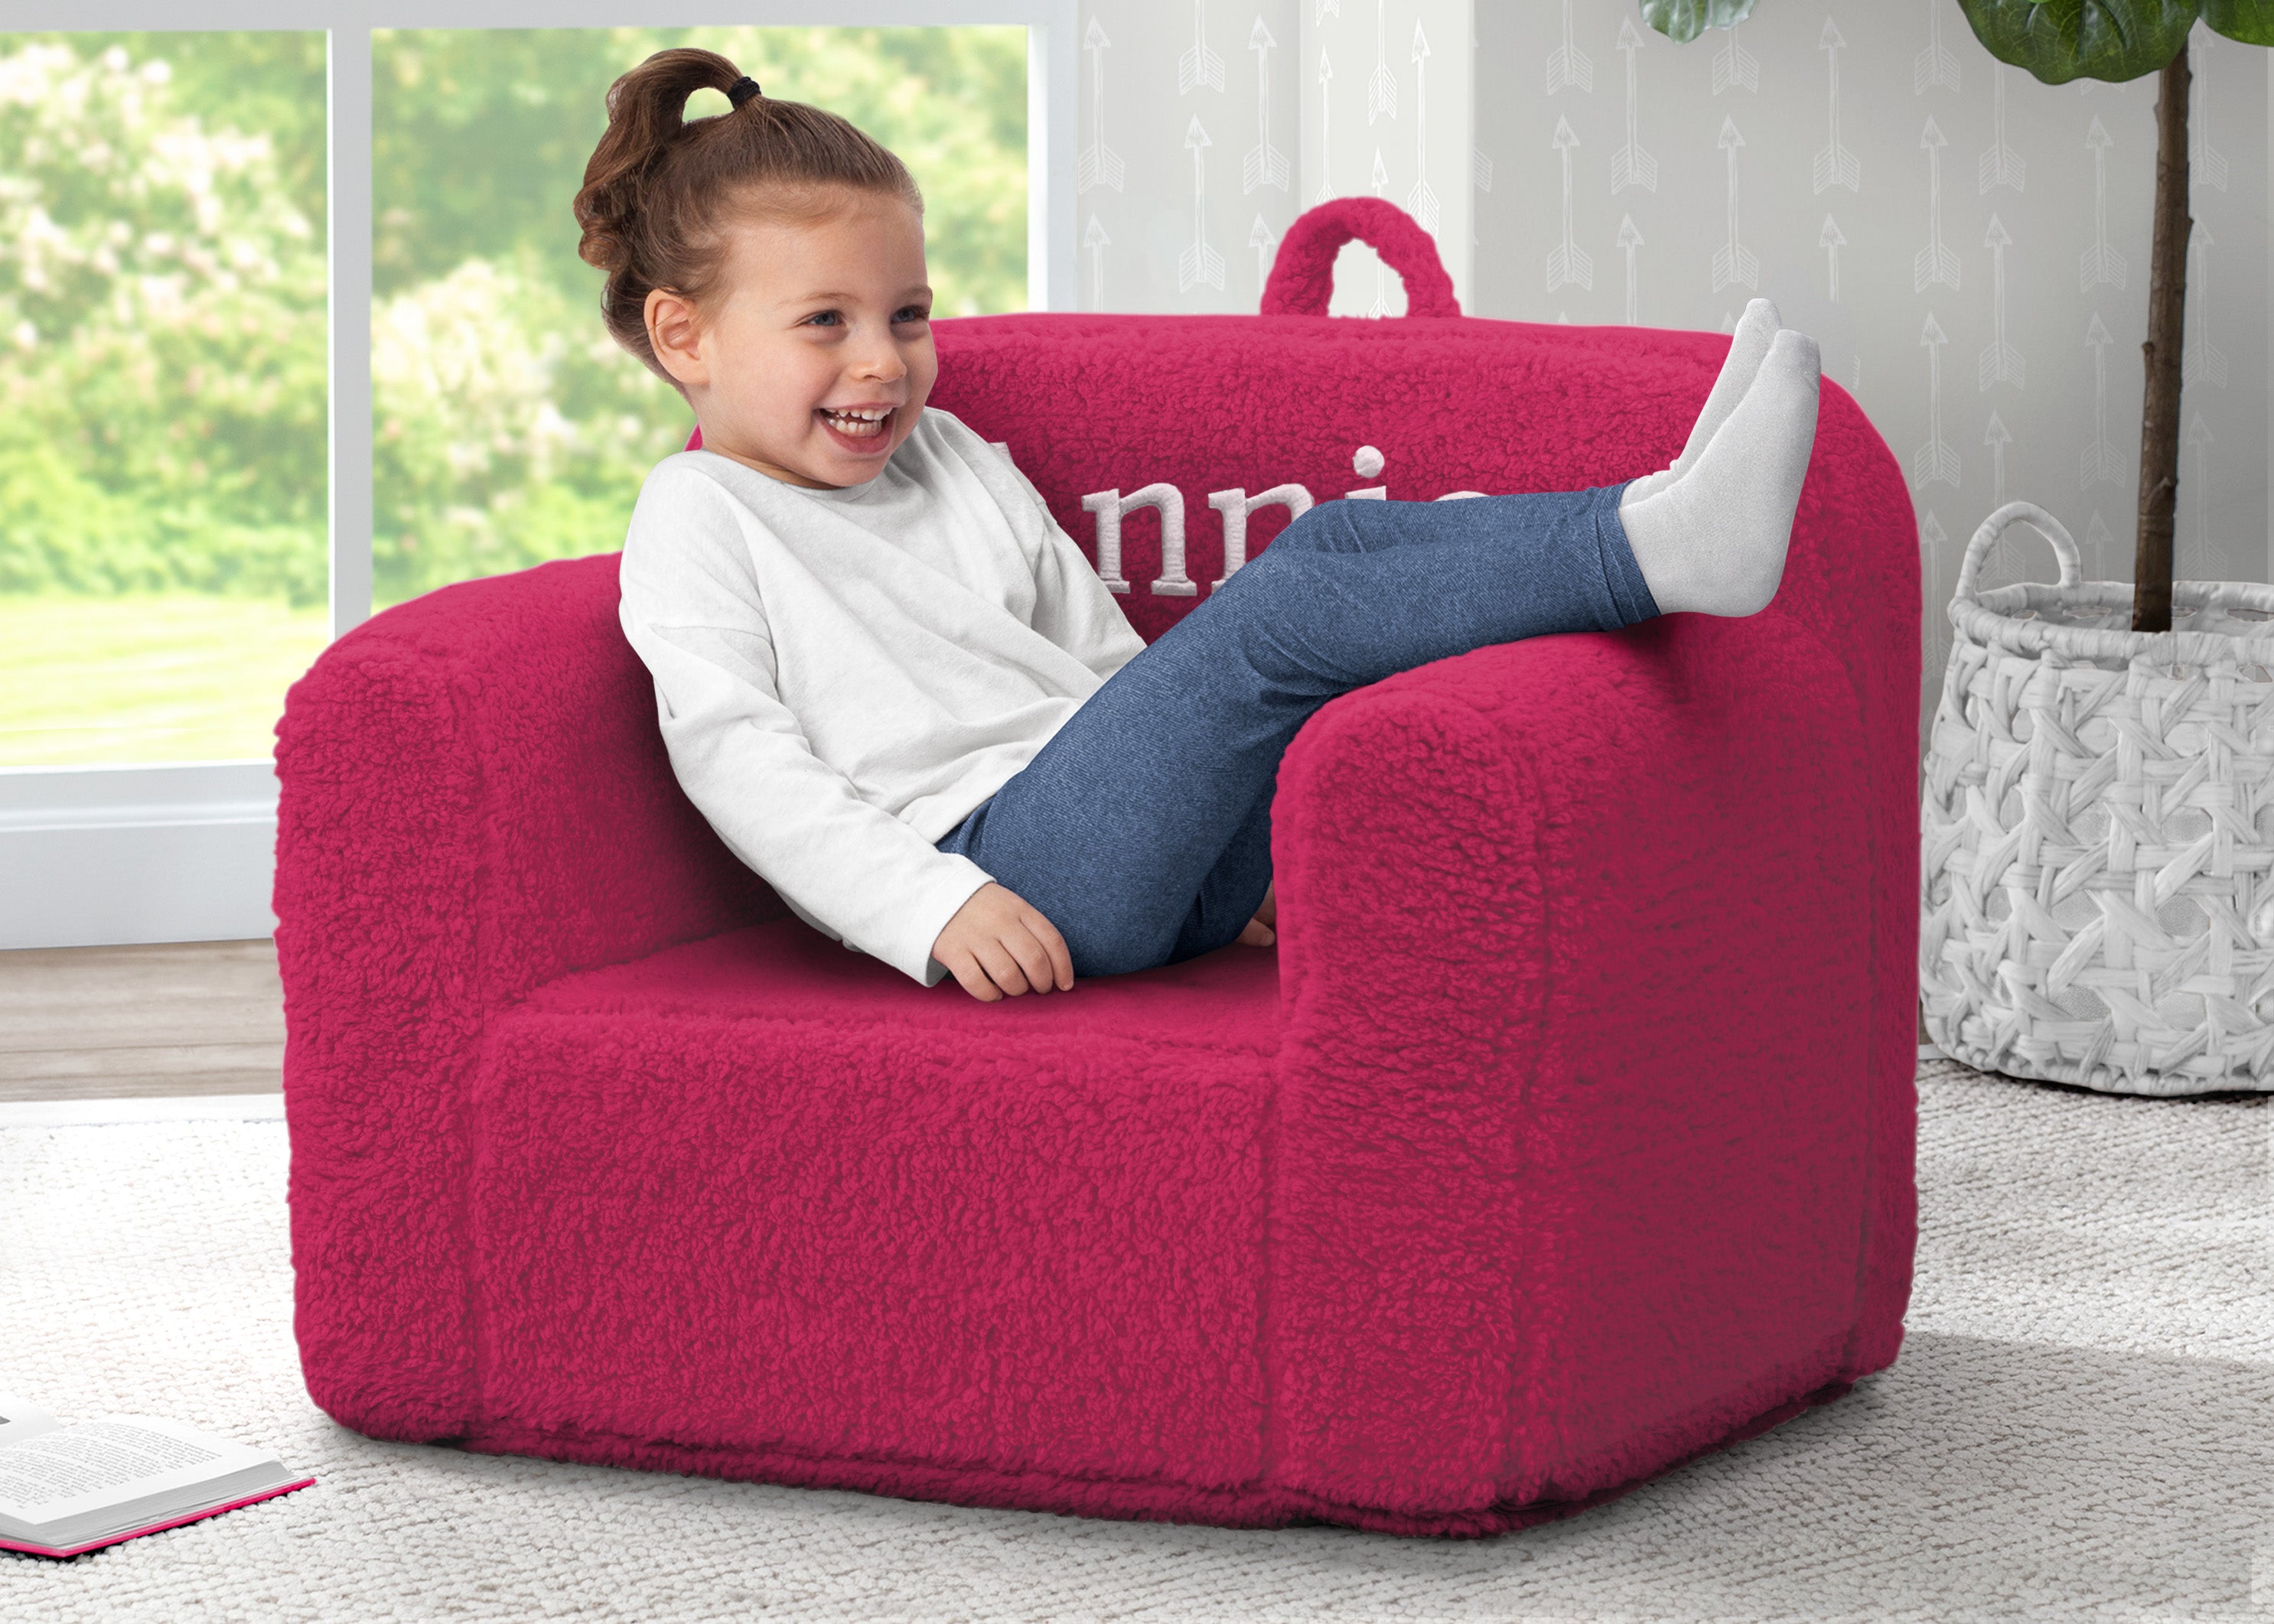 Cozee Chair for Kids - Delta Children